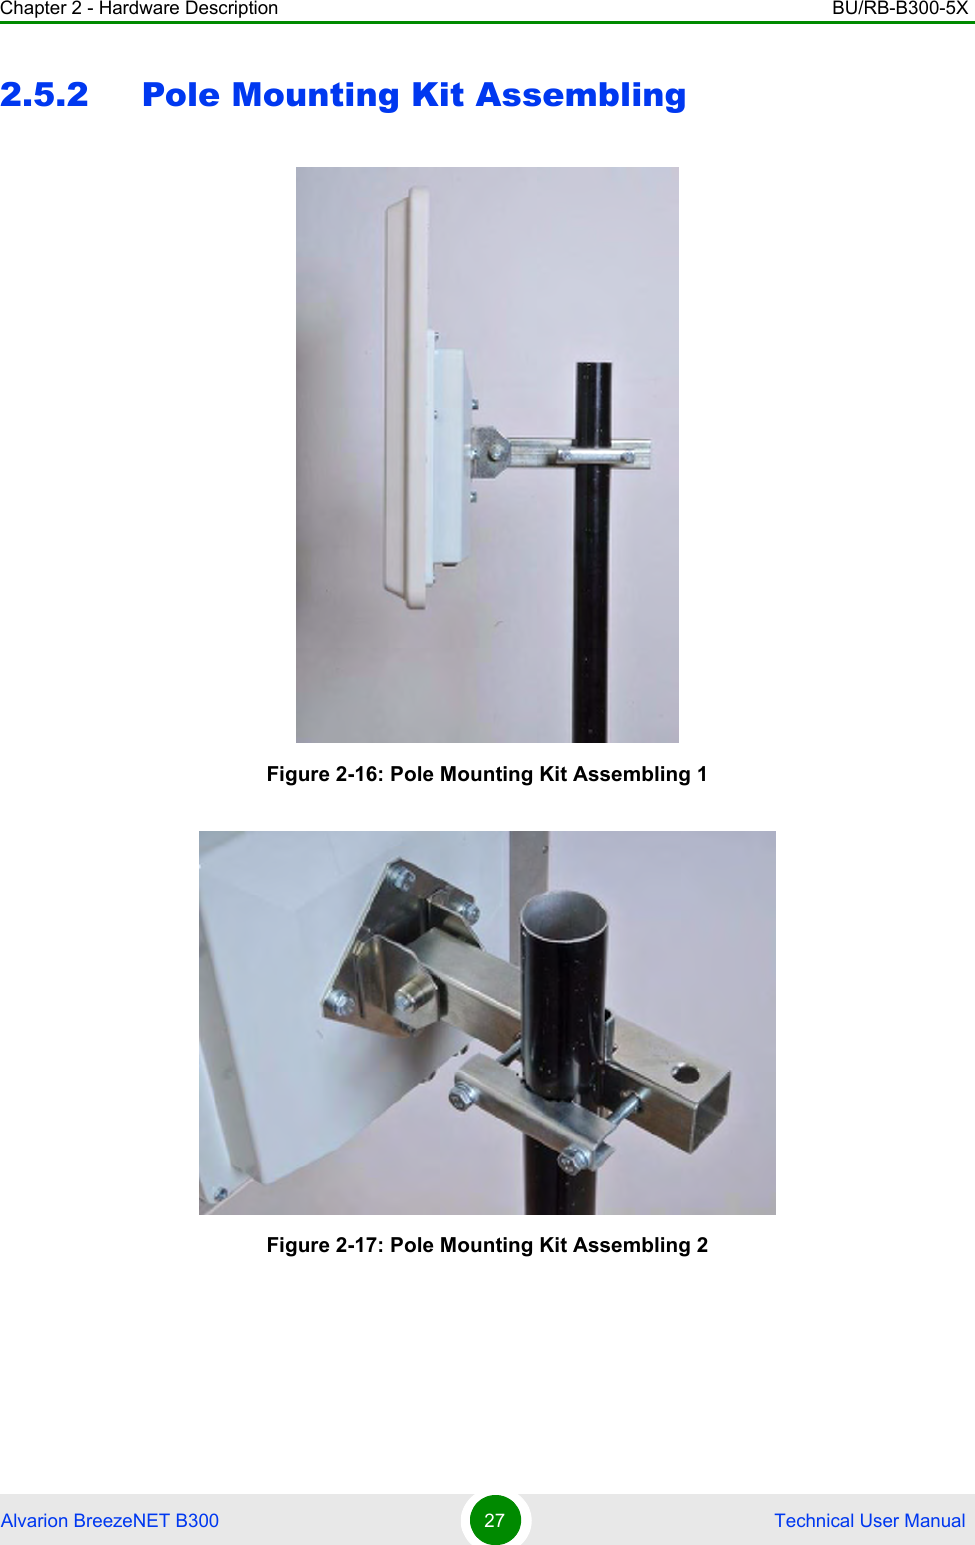 Chapter 2 - Hardware Description BU/RB-B300-5XAlvarion BreezeNET B300 27  Technical User Manual2.5.2 Pole Mounting Kit AssemblingFigure 2-16: Pole Mounting Kit Assembling 1Figure 2-17: Pole Mounting Kit Assembling 2